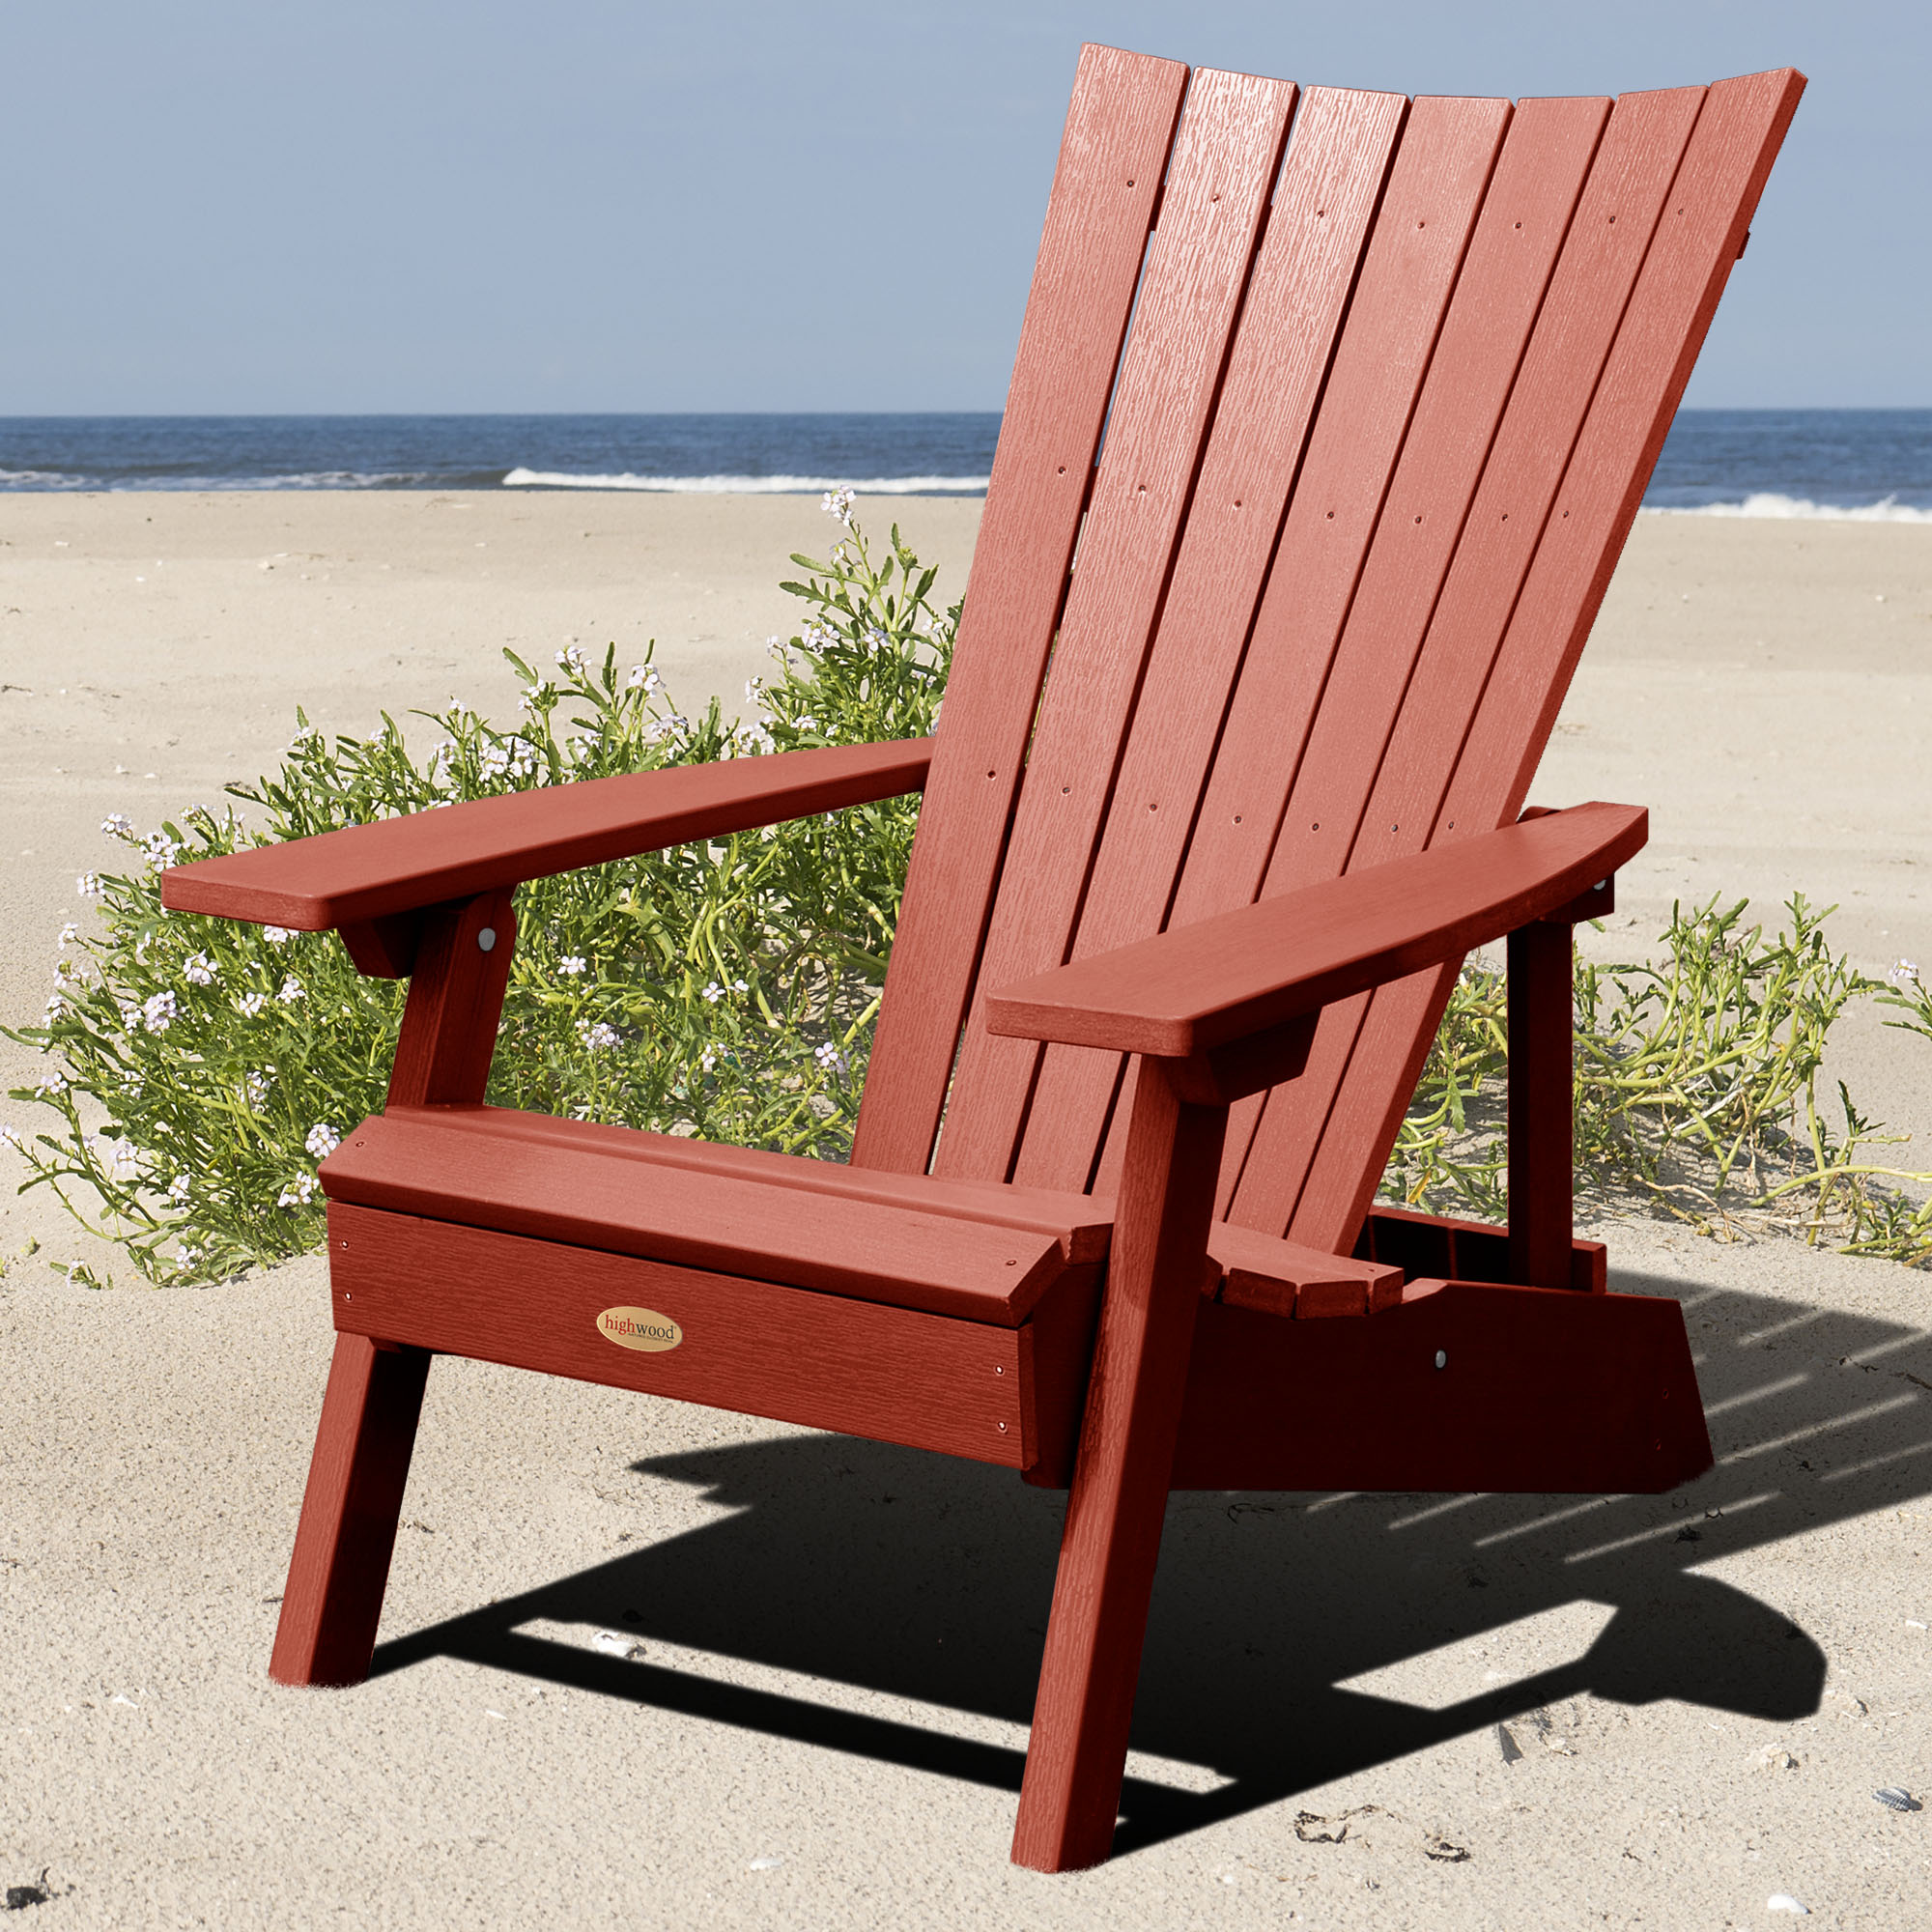 Highwood Manhattan Beach Adirondack Chair - image 2 of 3